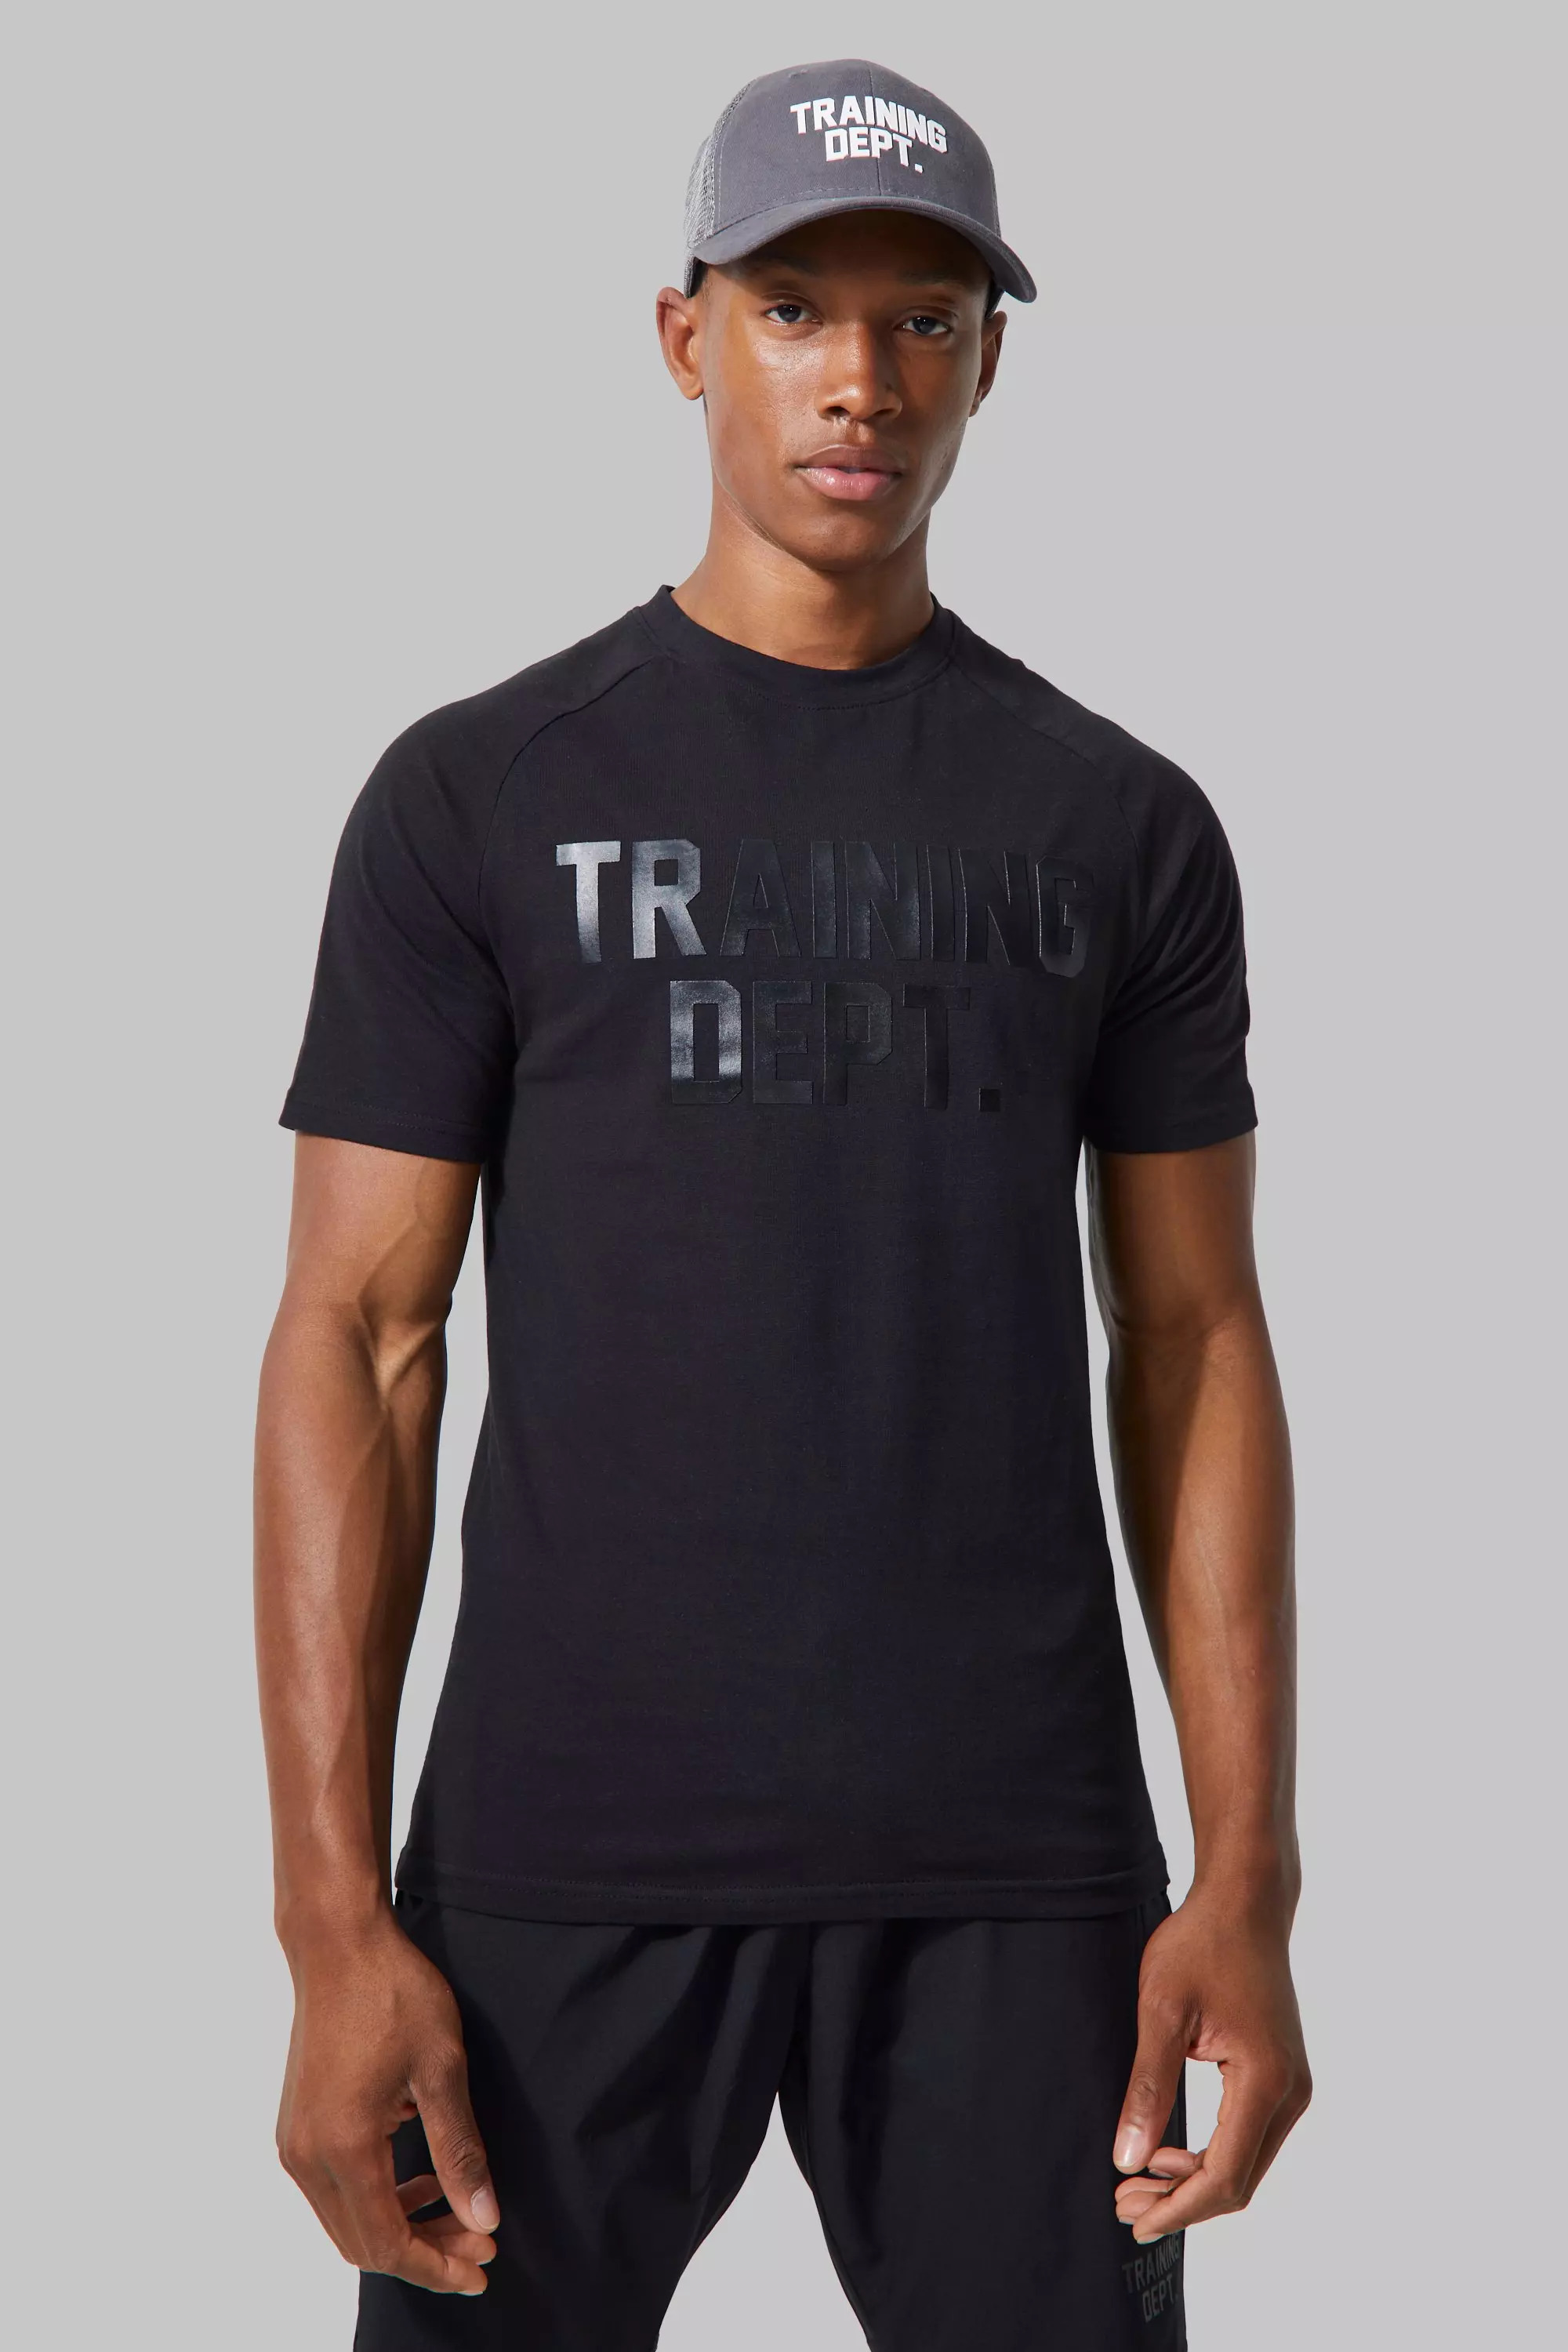 Man Active Muscle Fit Training Dept T Shirt Black